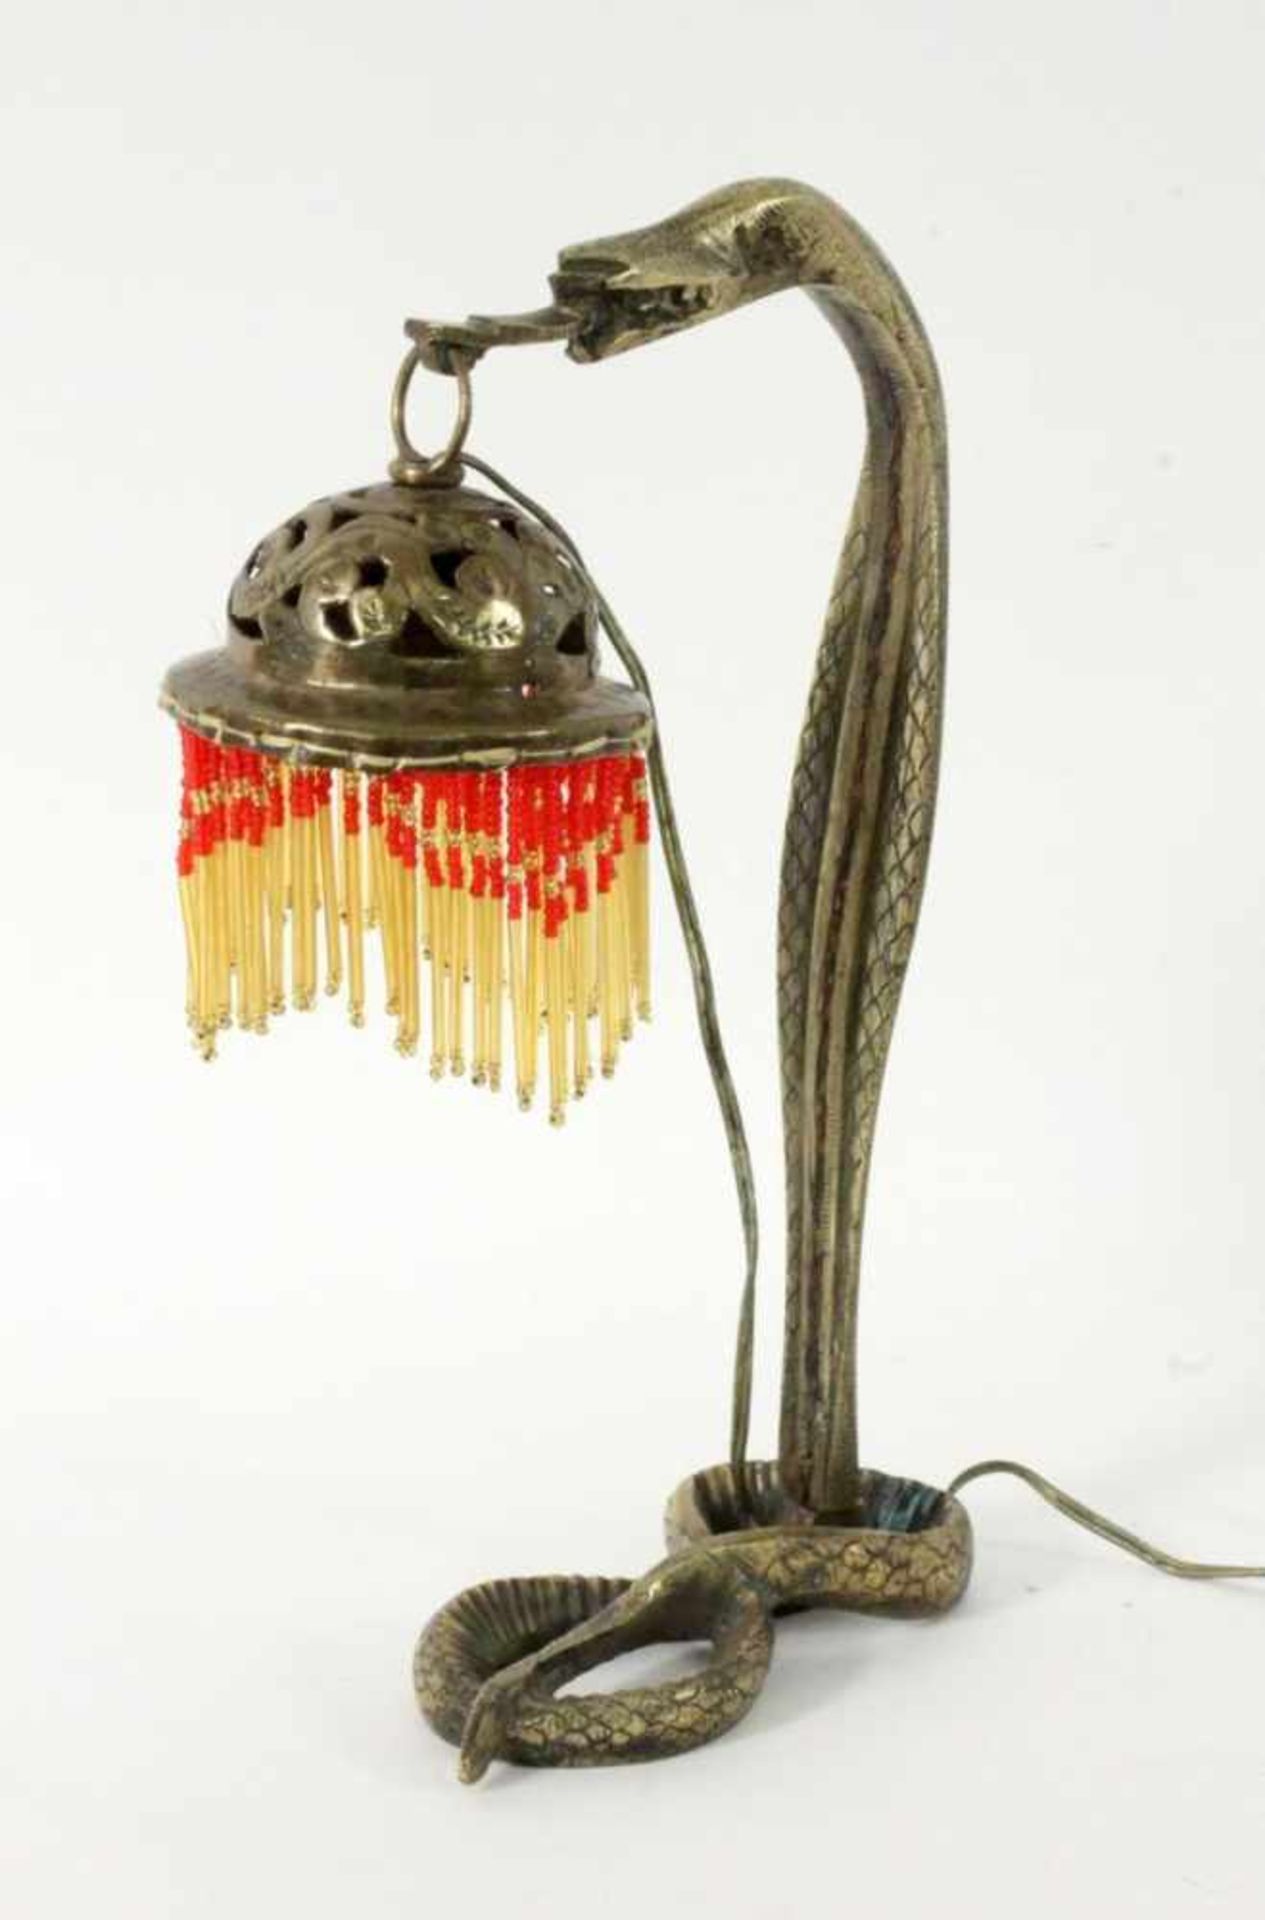 TISCHLAMPE IN SCHLANGENFORM Messing mit farbigem Glasbehang. H.31cm A SNAKE-SHAPED TABLE LAMP